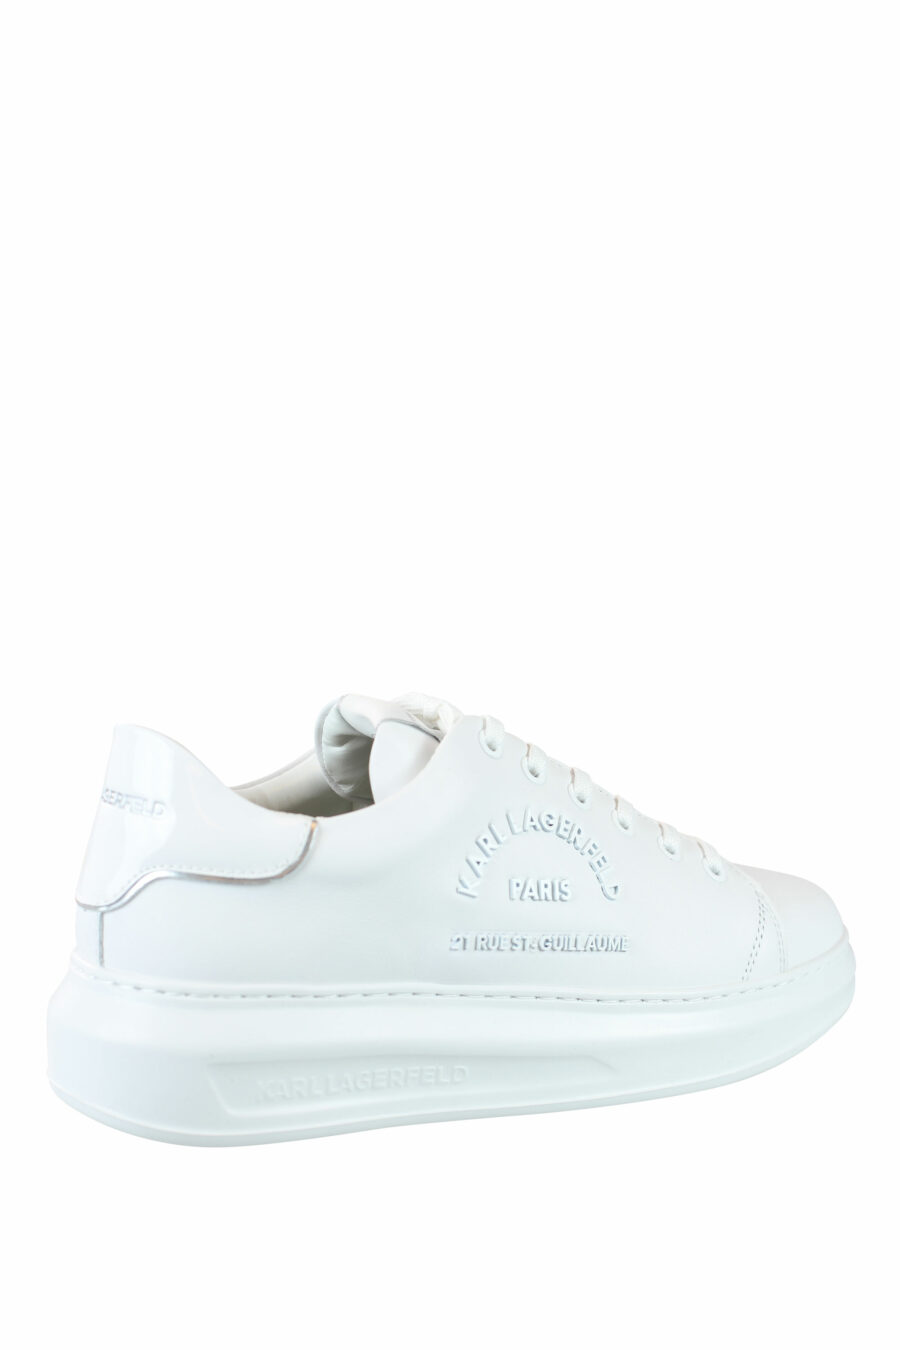 Zapatillas blancas con logo "rue st guillaume" blanco - IMG 0026